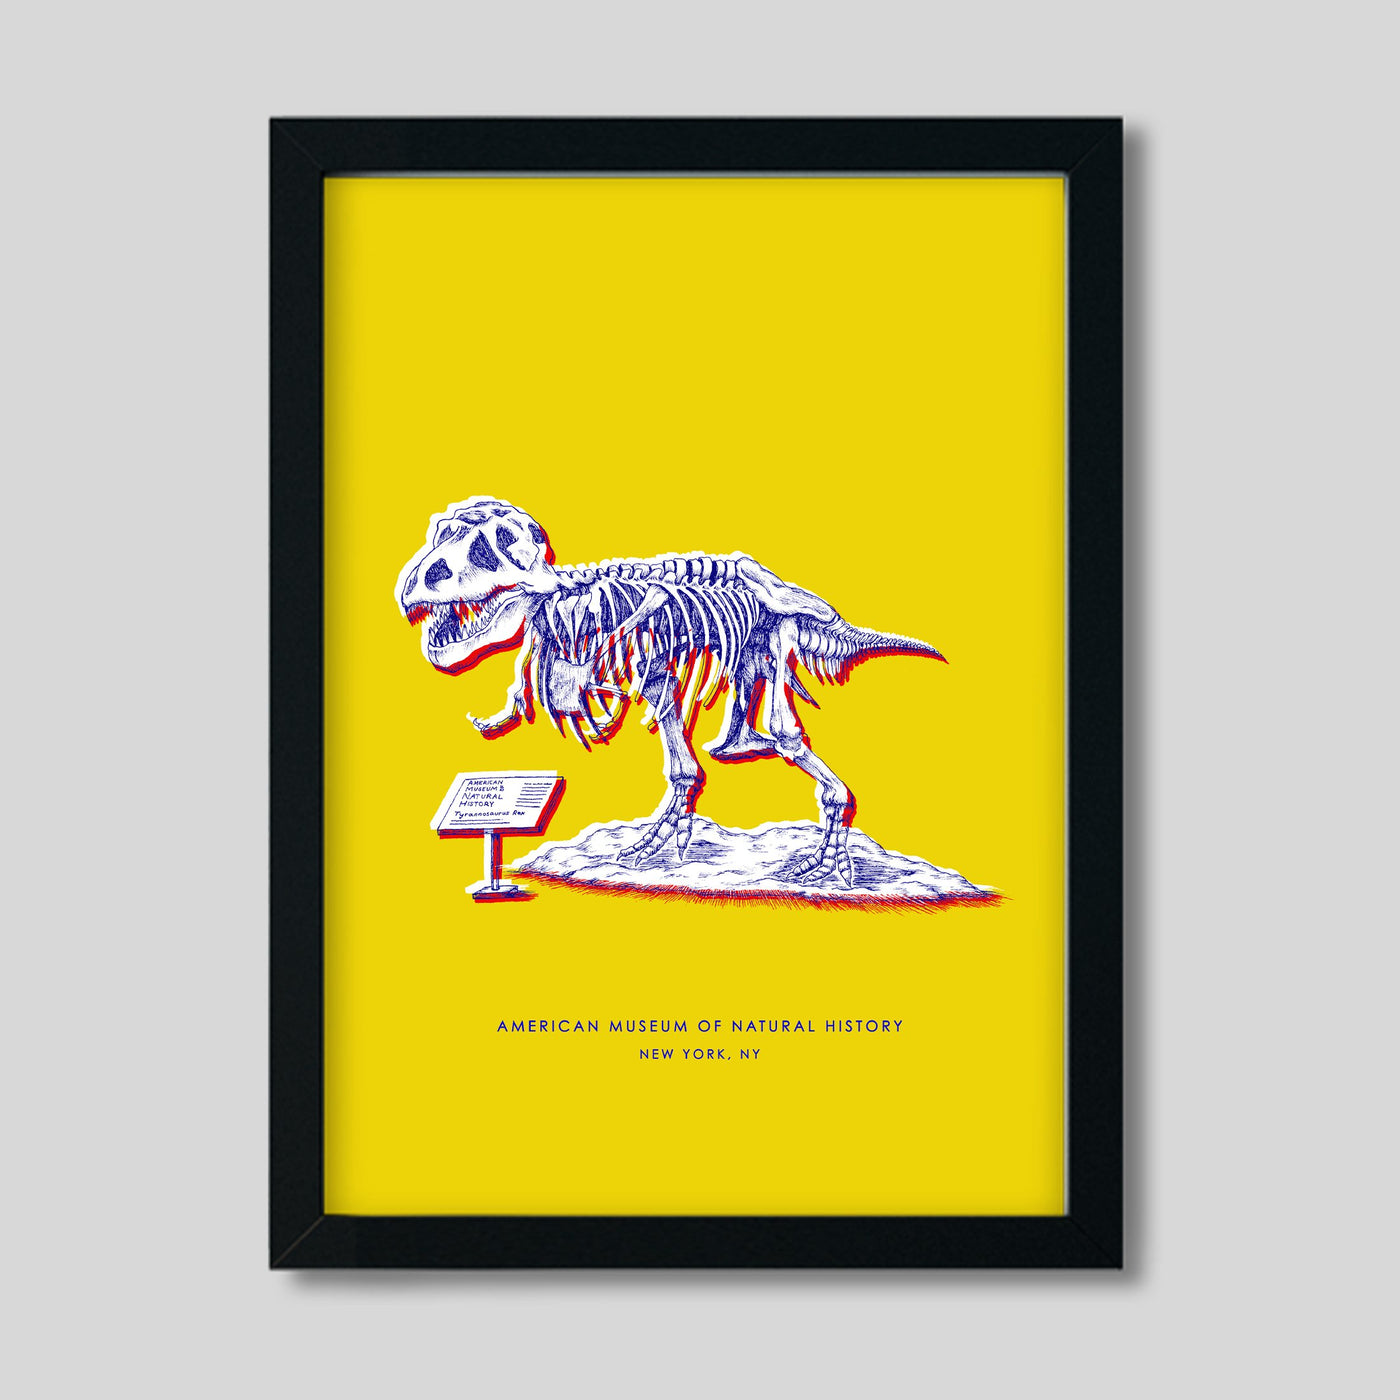 Gallery Prints Yellow Print / 8x10 / Black Frame New York Dinosaur Print dombezalergii